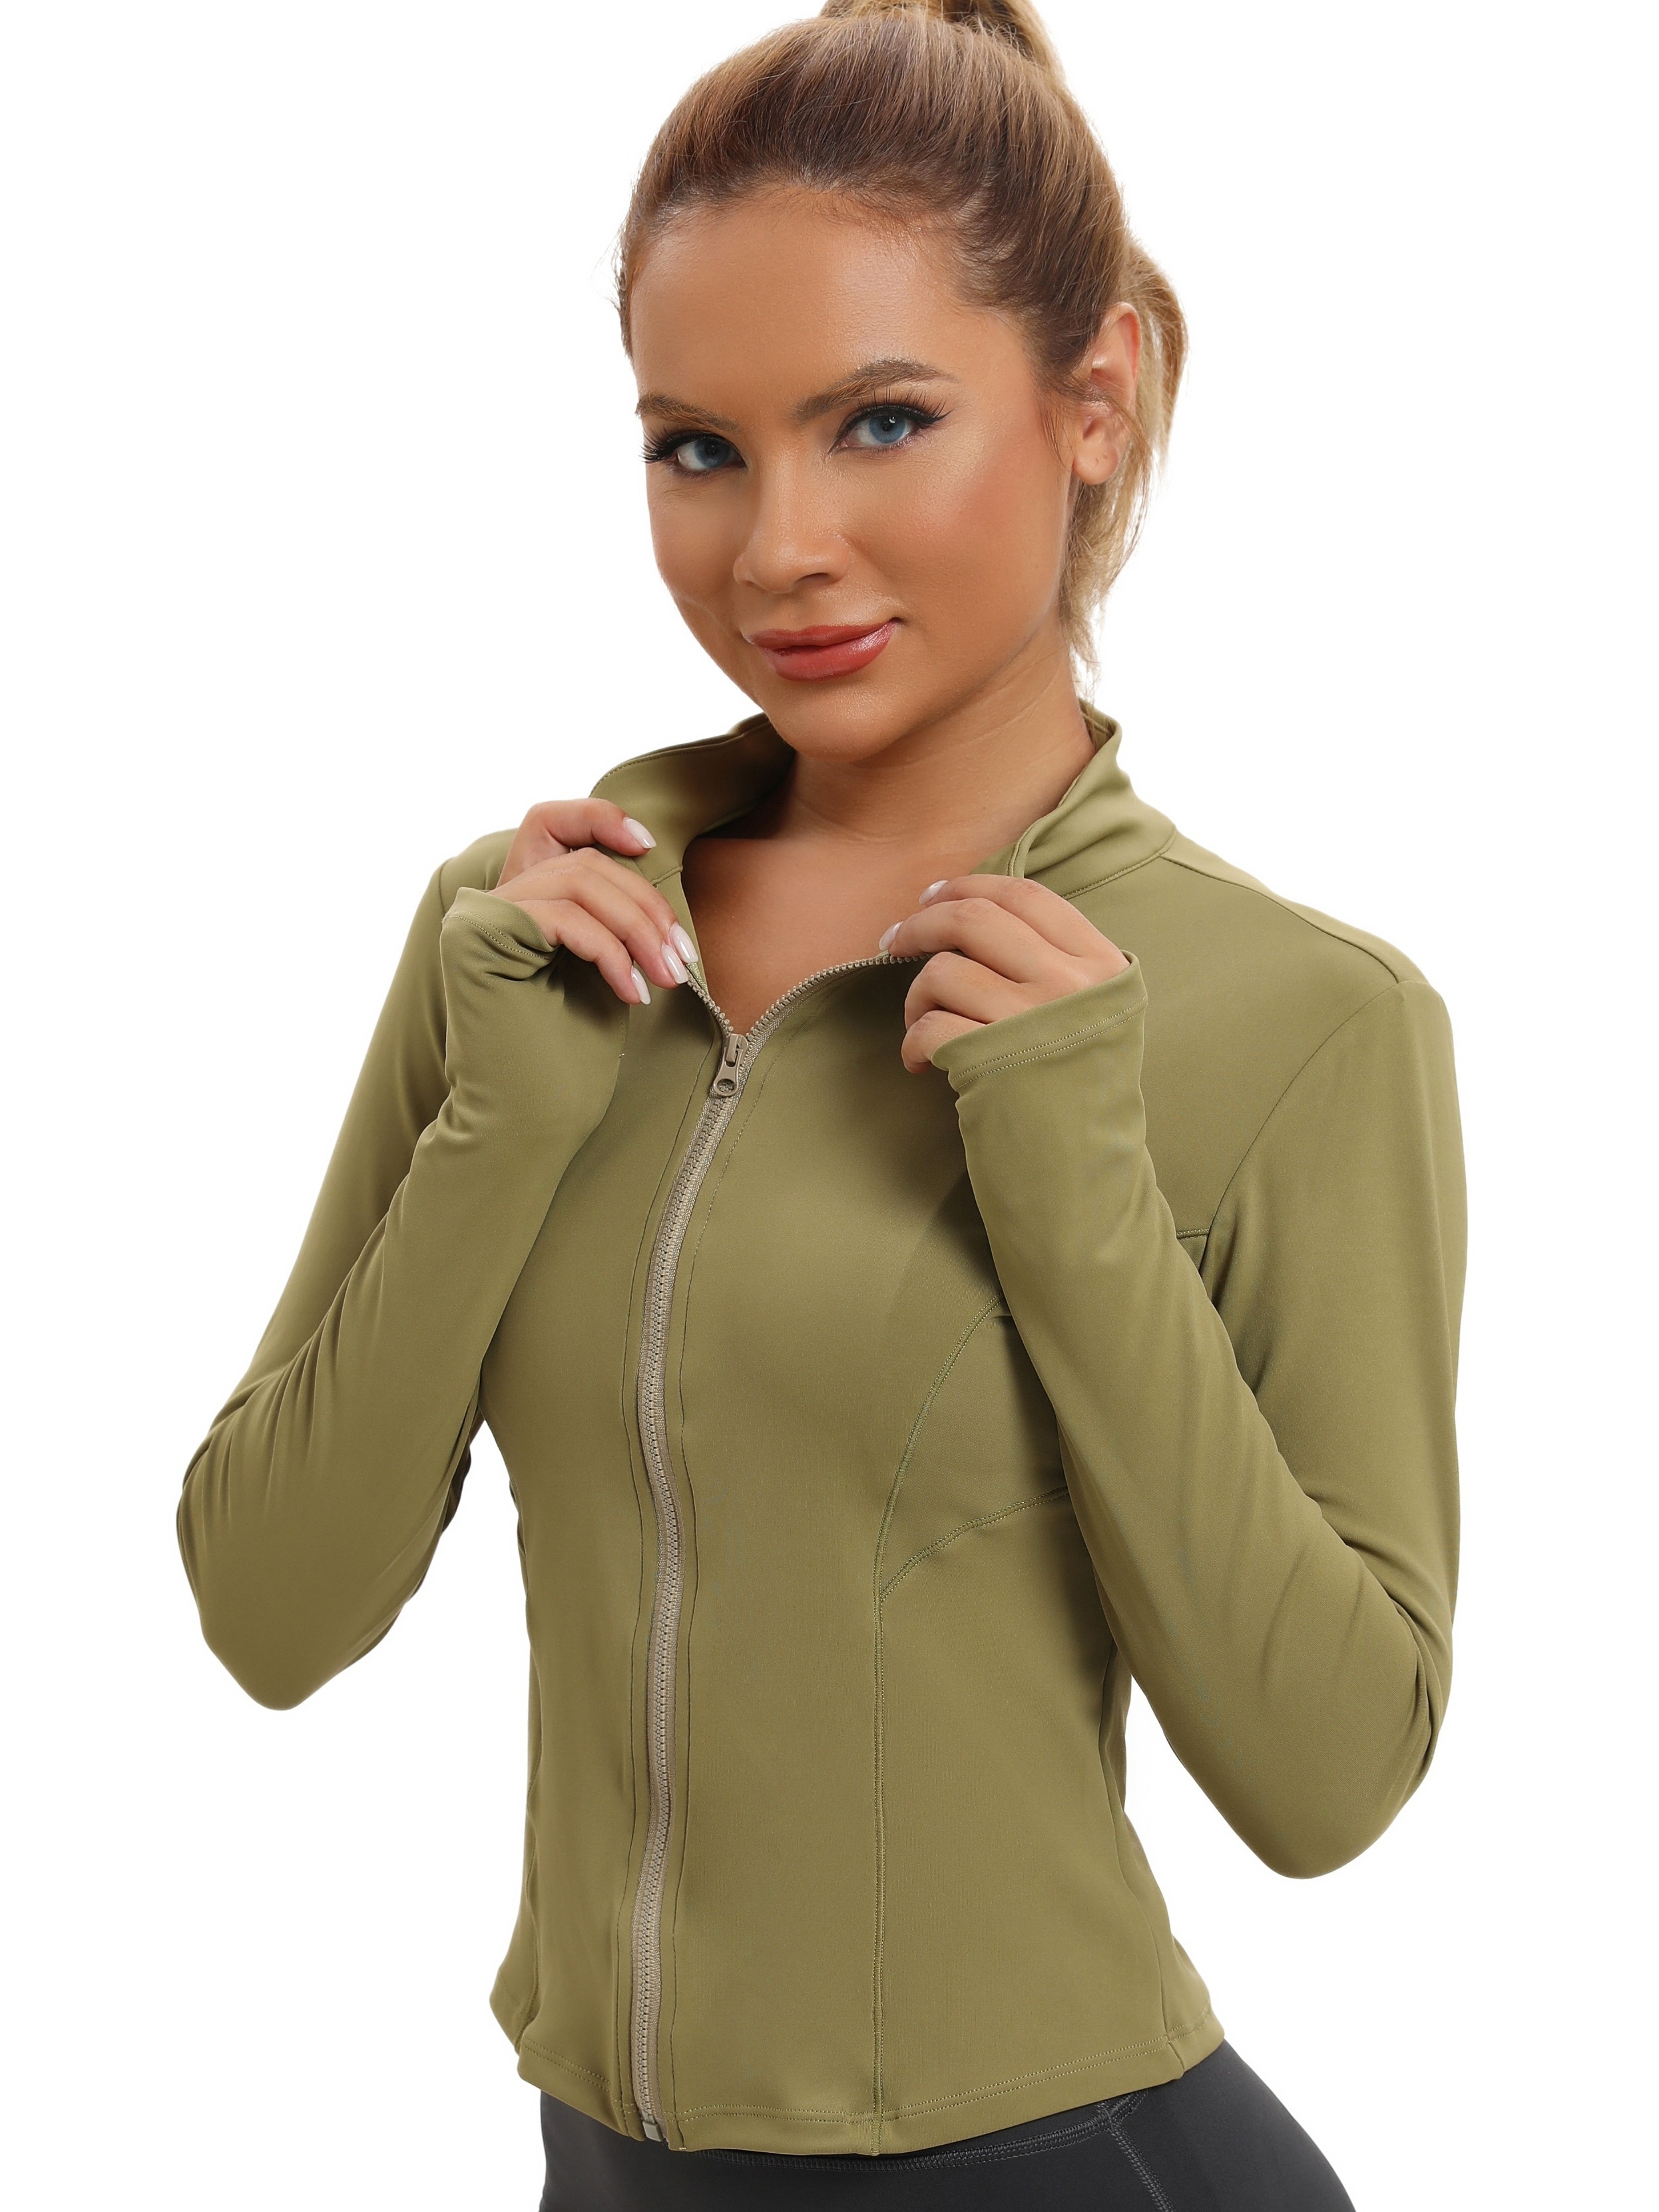 Long Sleeve Sports Jacket Women Zip Fitness Yoga Shirt Winter Warm